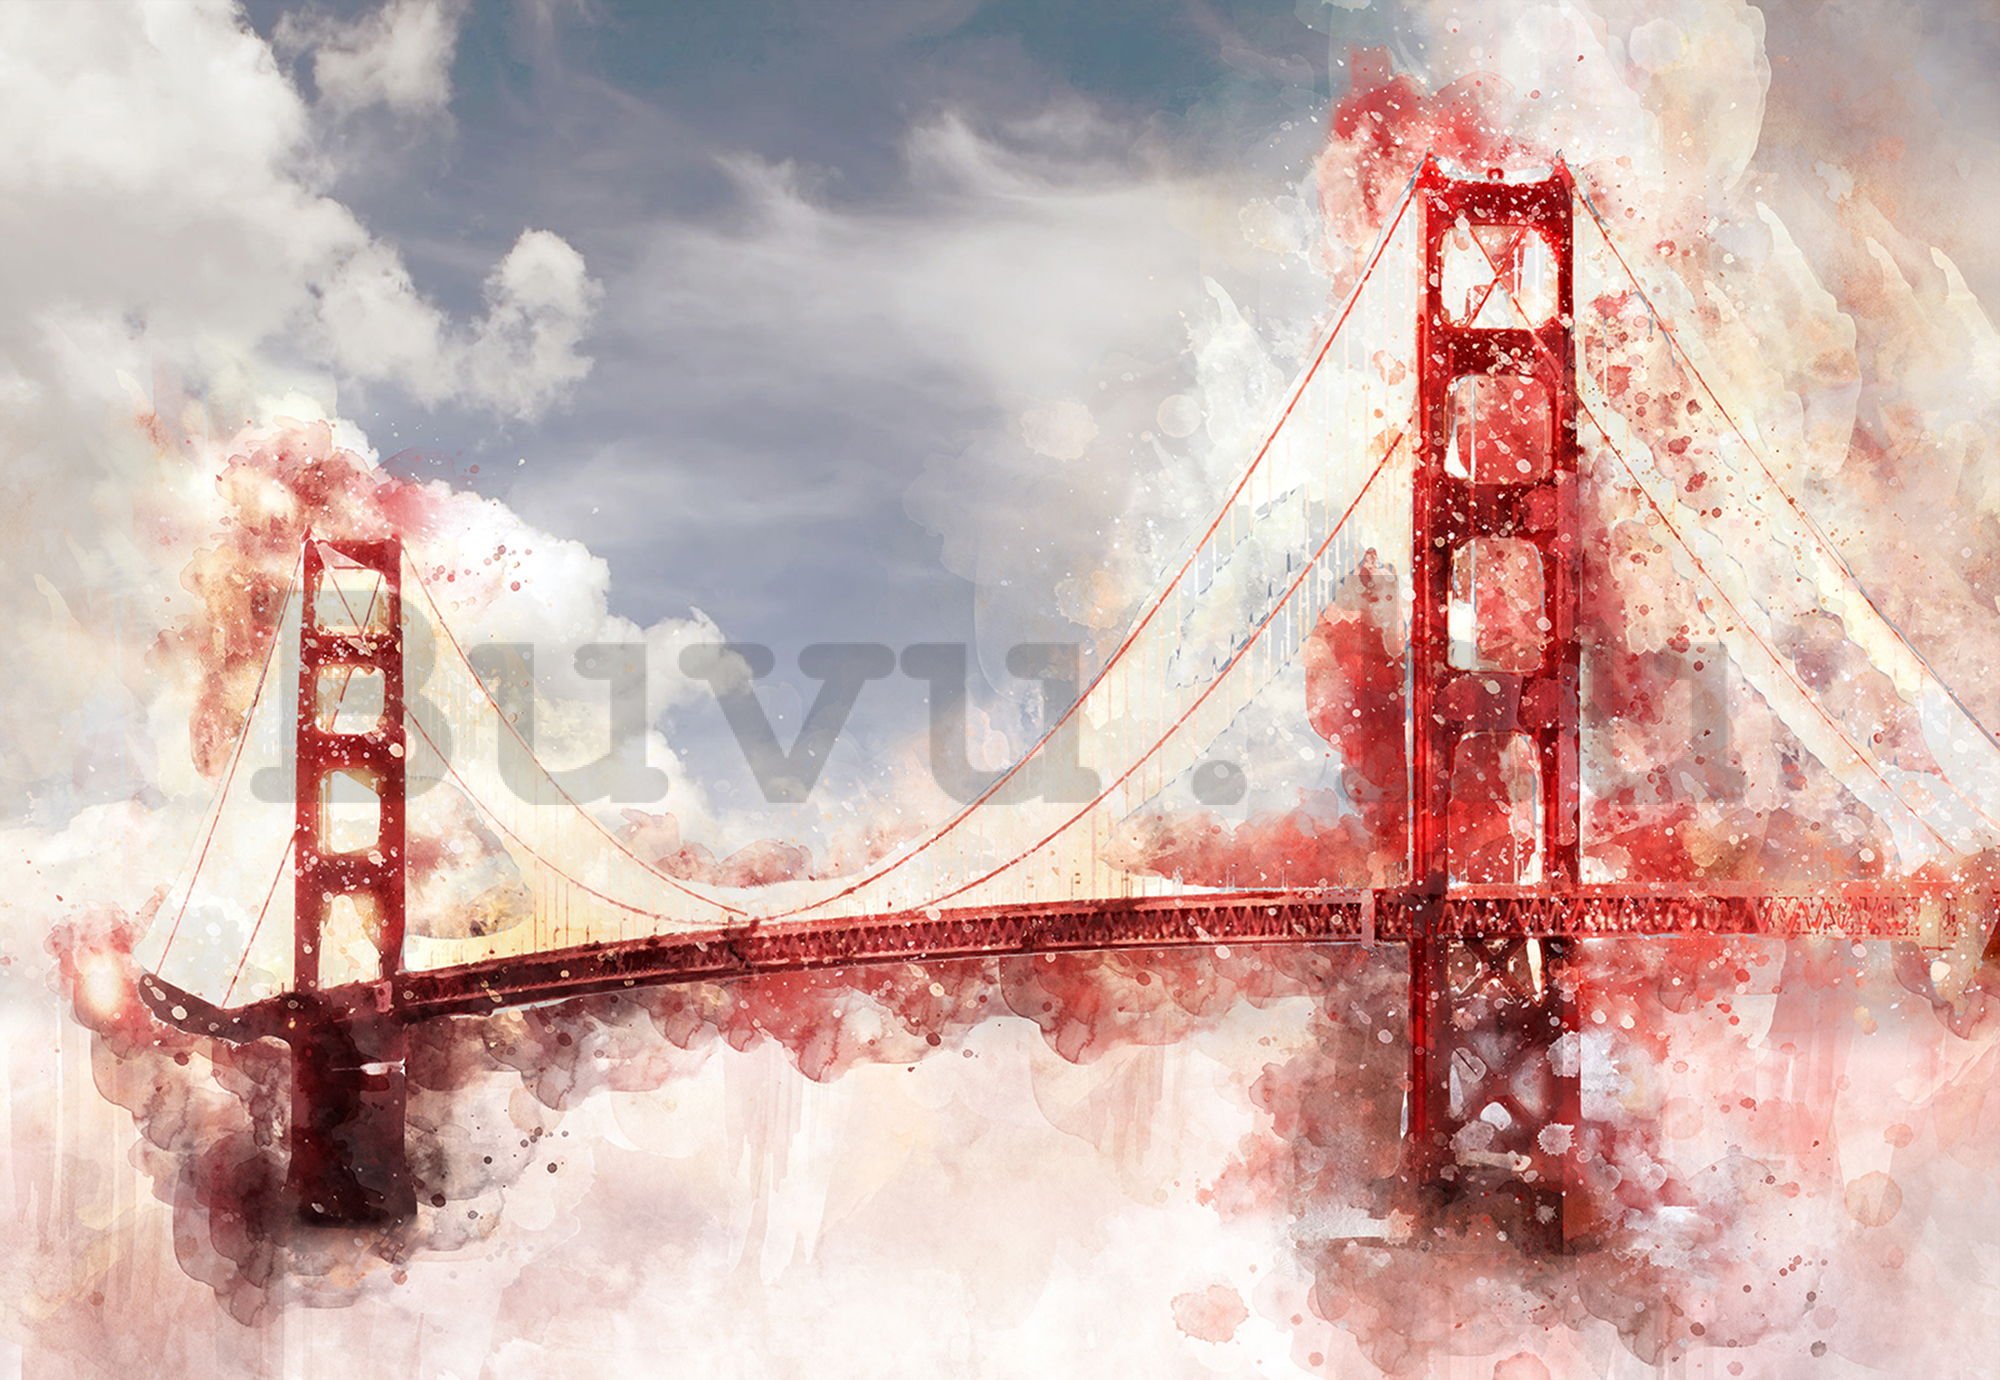 Fotótapéta: Golden Gate Bridge (festett) - 184x254 cm